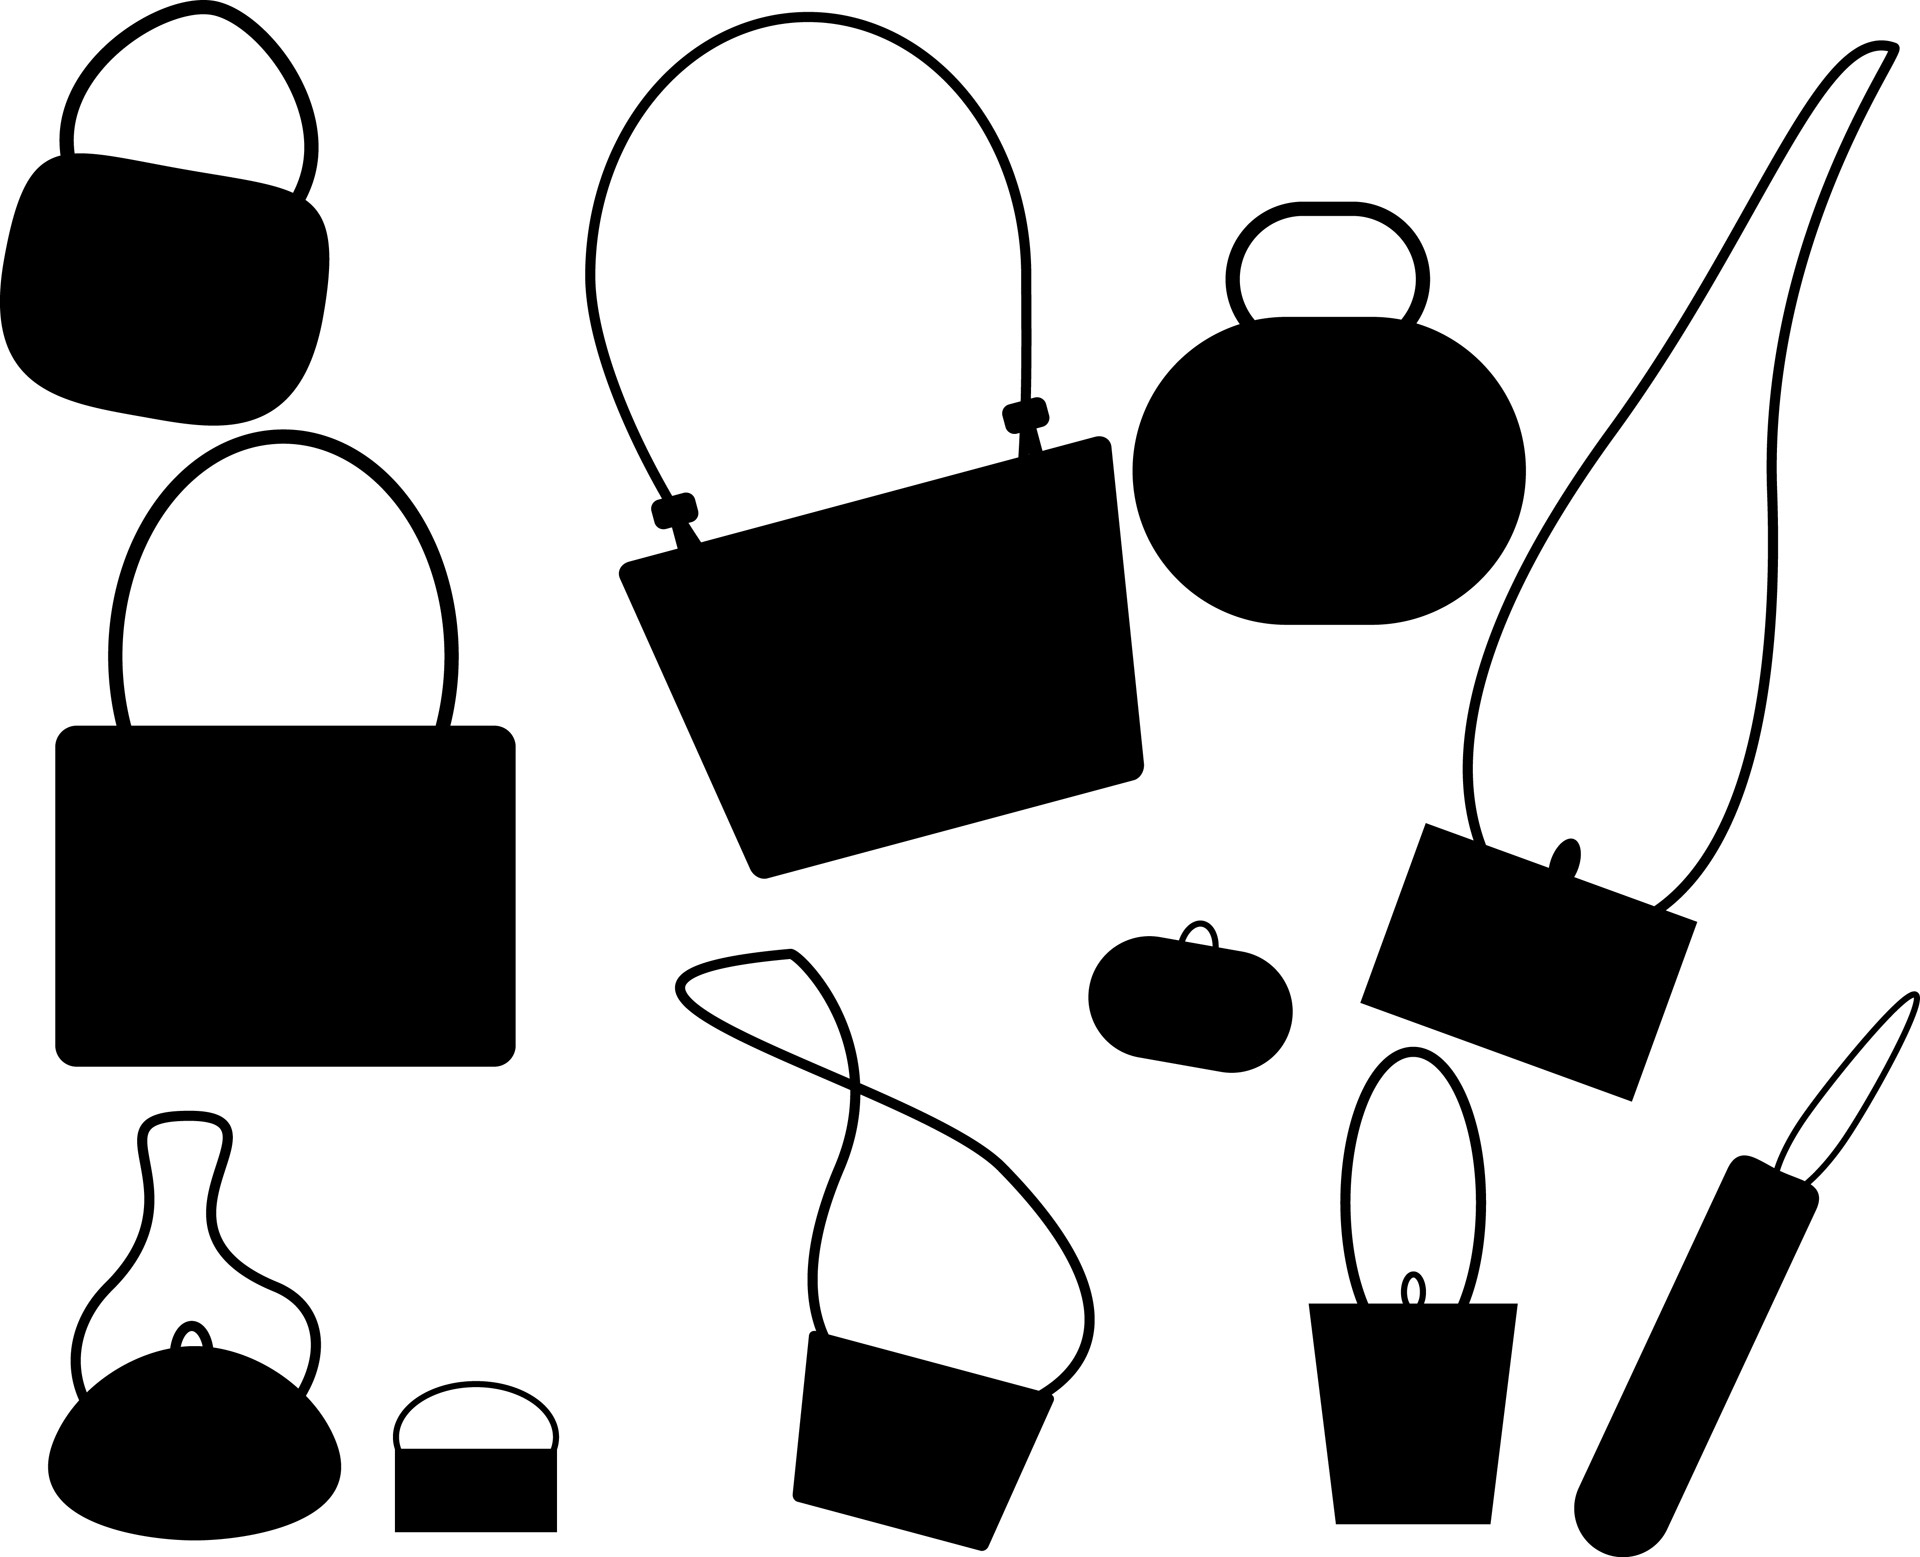 black silhouette of purses, bags and handbags